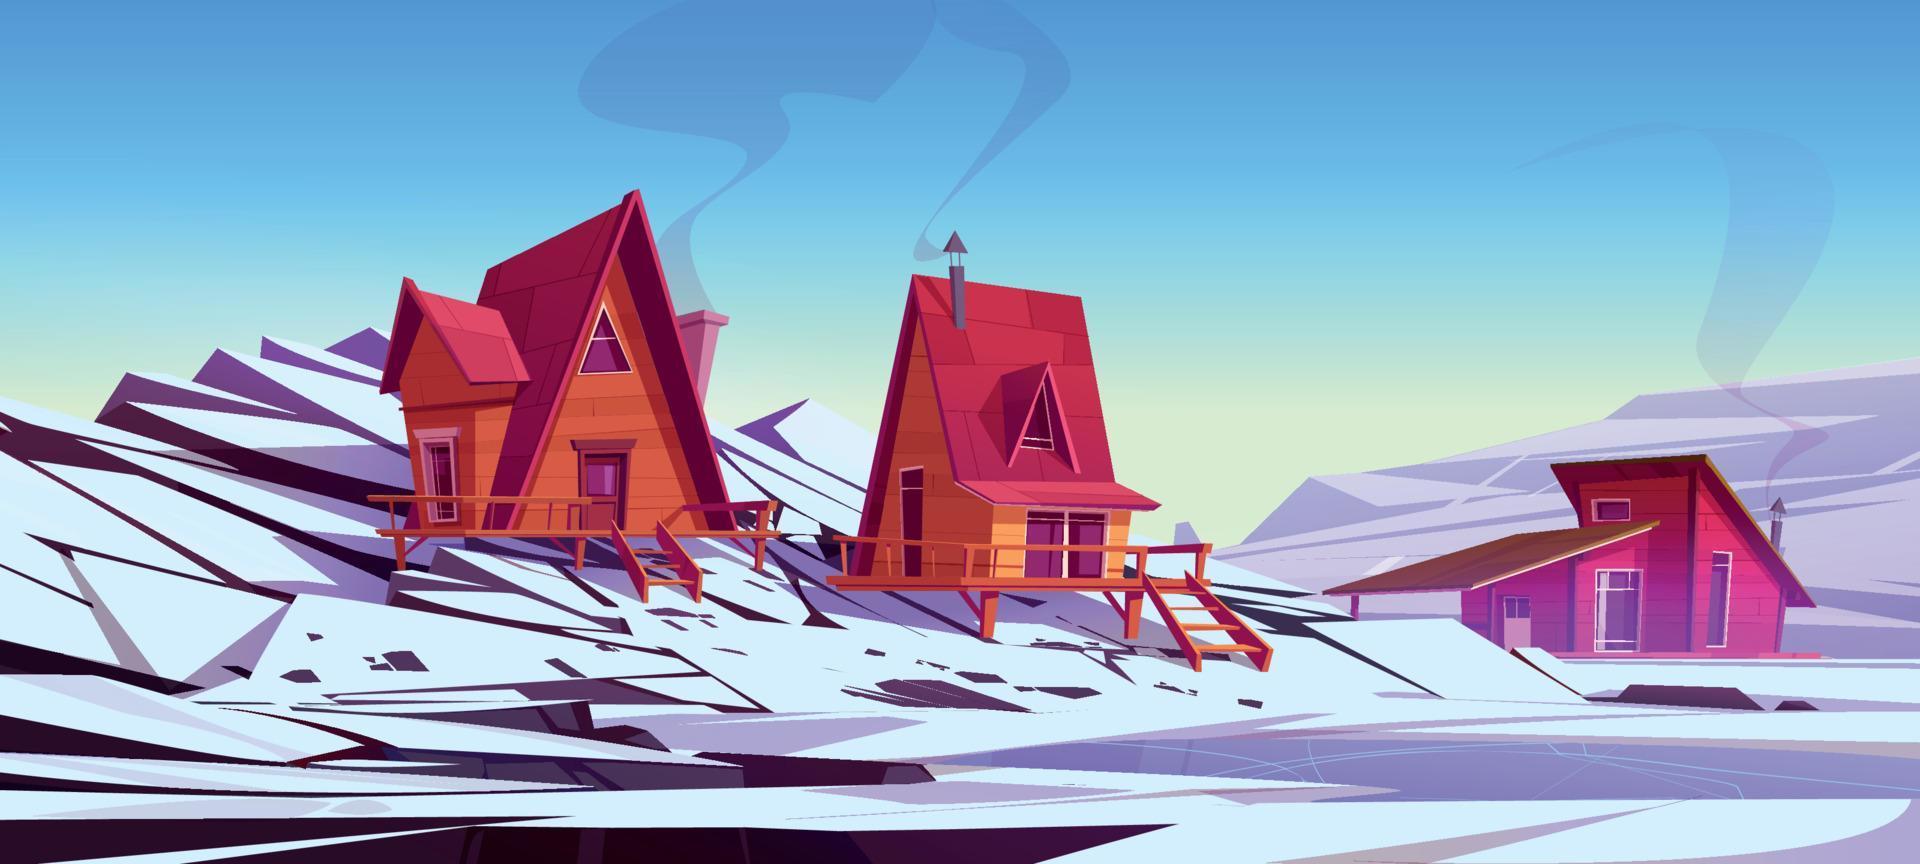 vinter- berg landskap med chalet hus vektor